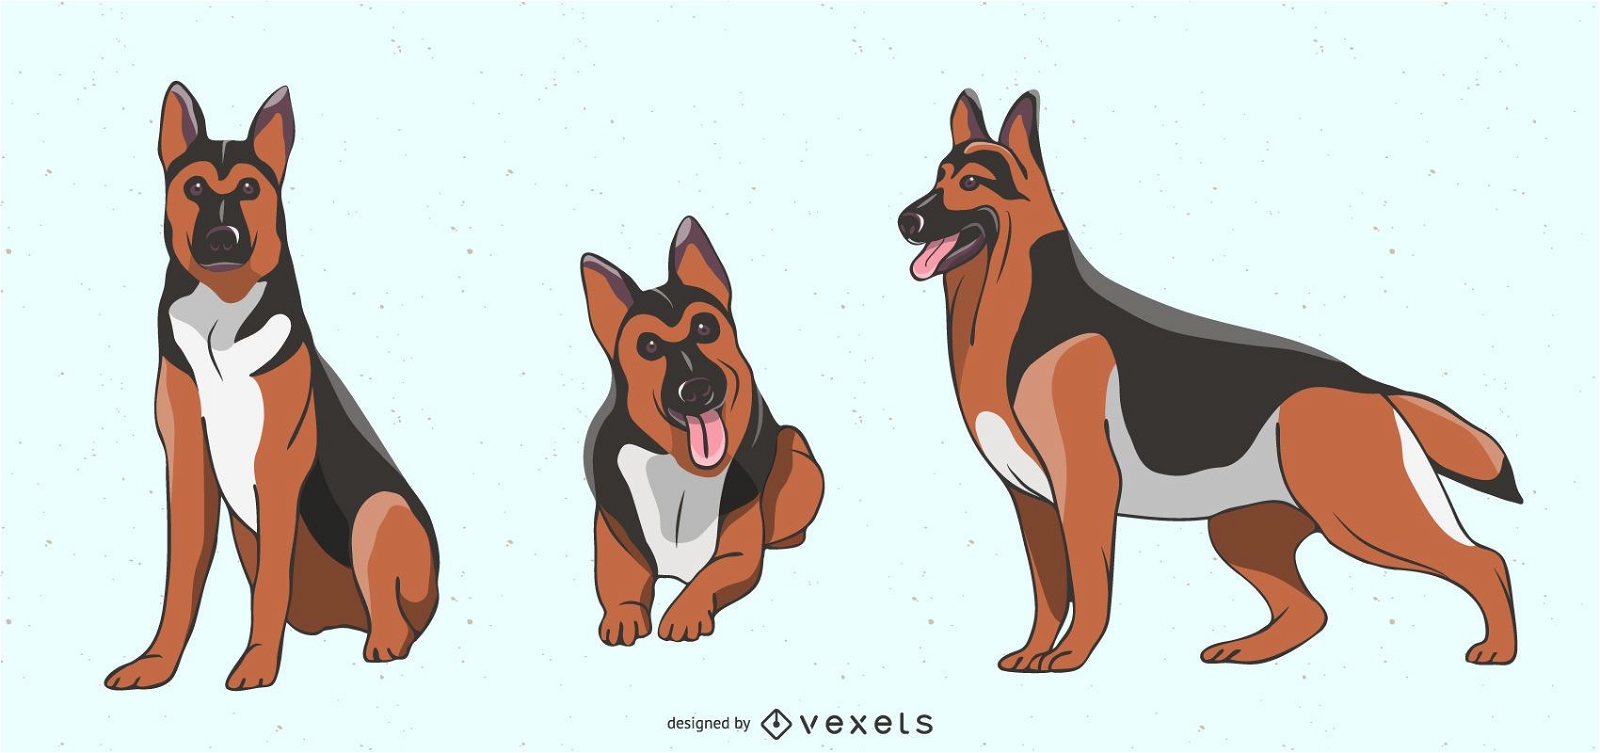 German shepherd dog illustration set